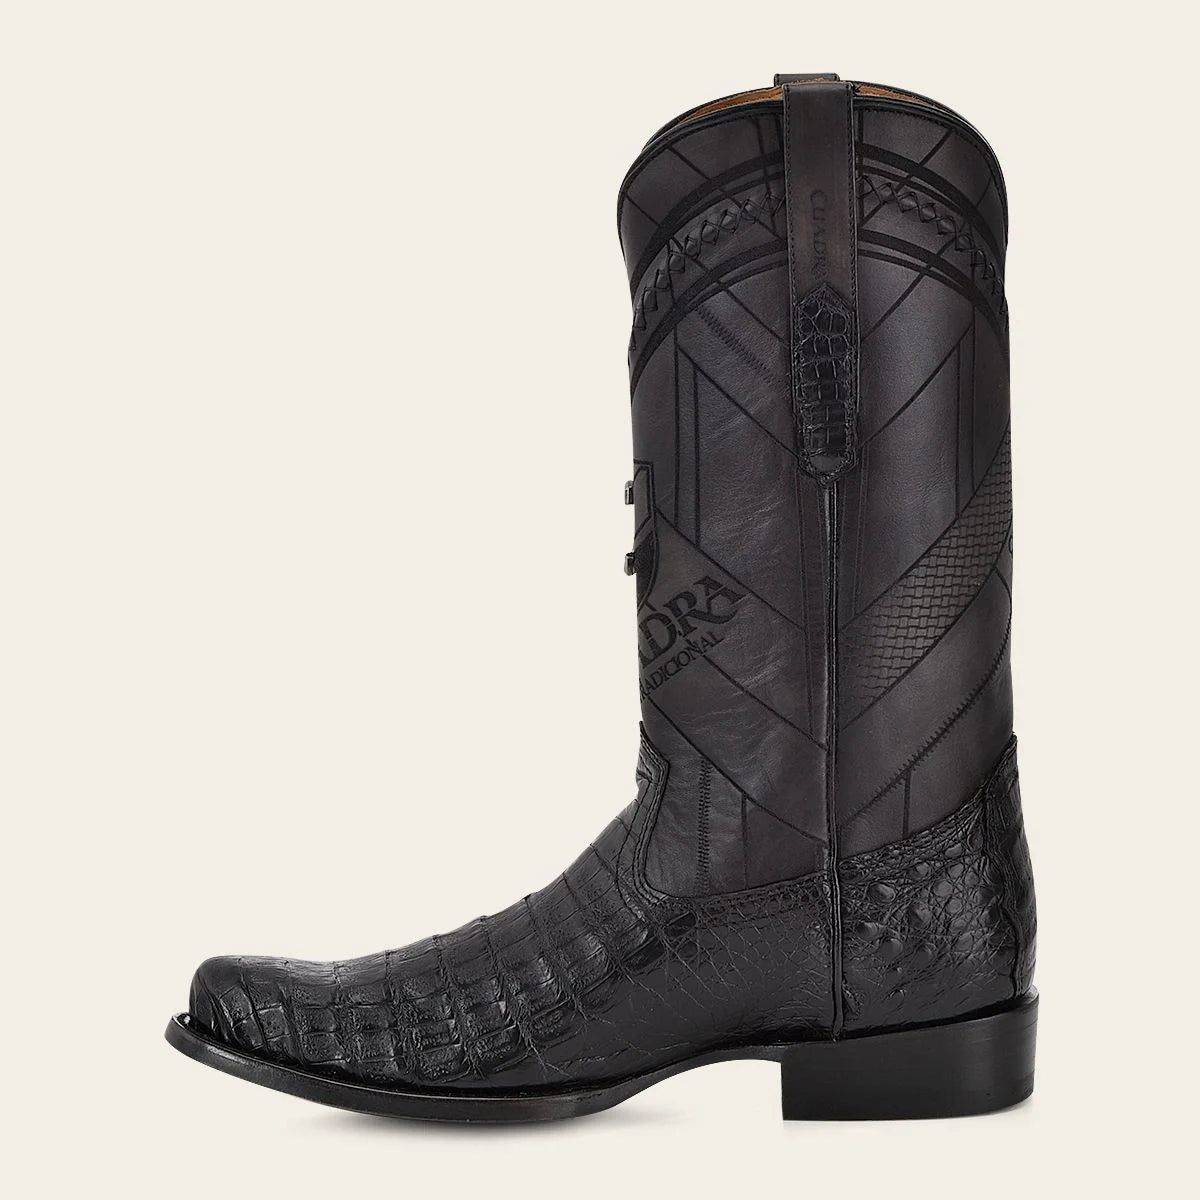 S42FFY - Cuadra black dress cowboy fuscus leather boots for men